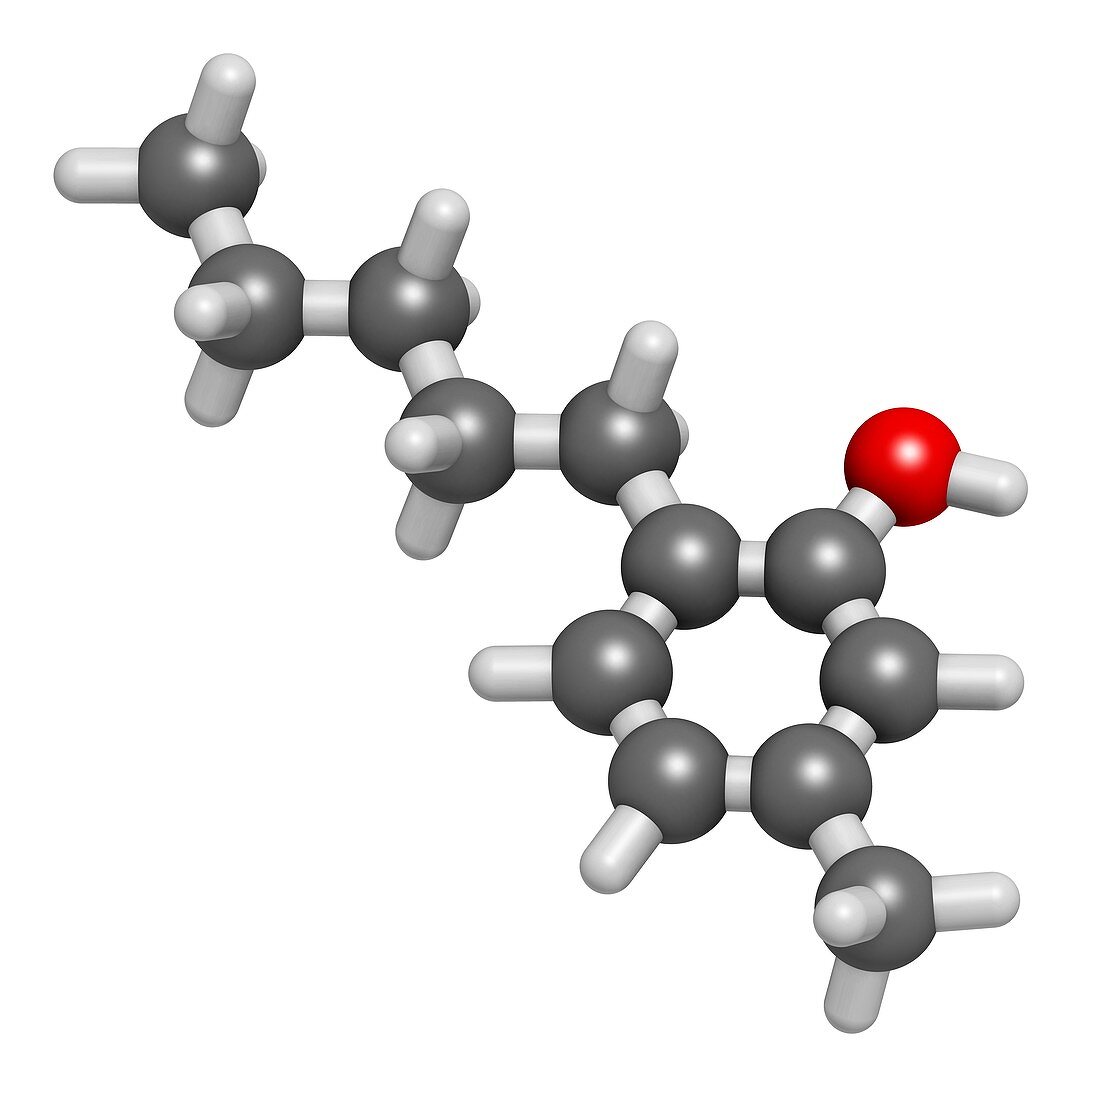 Amylmetacresol antiseptic drug molecule